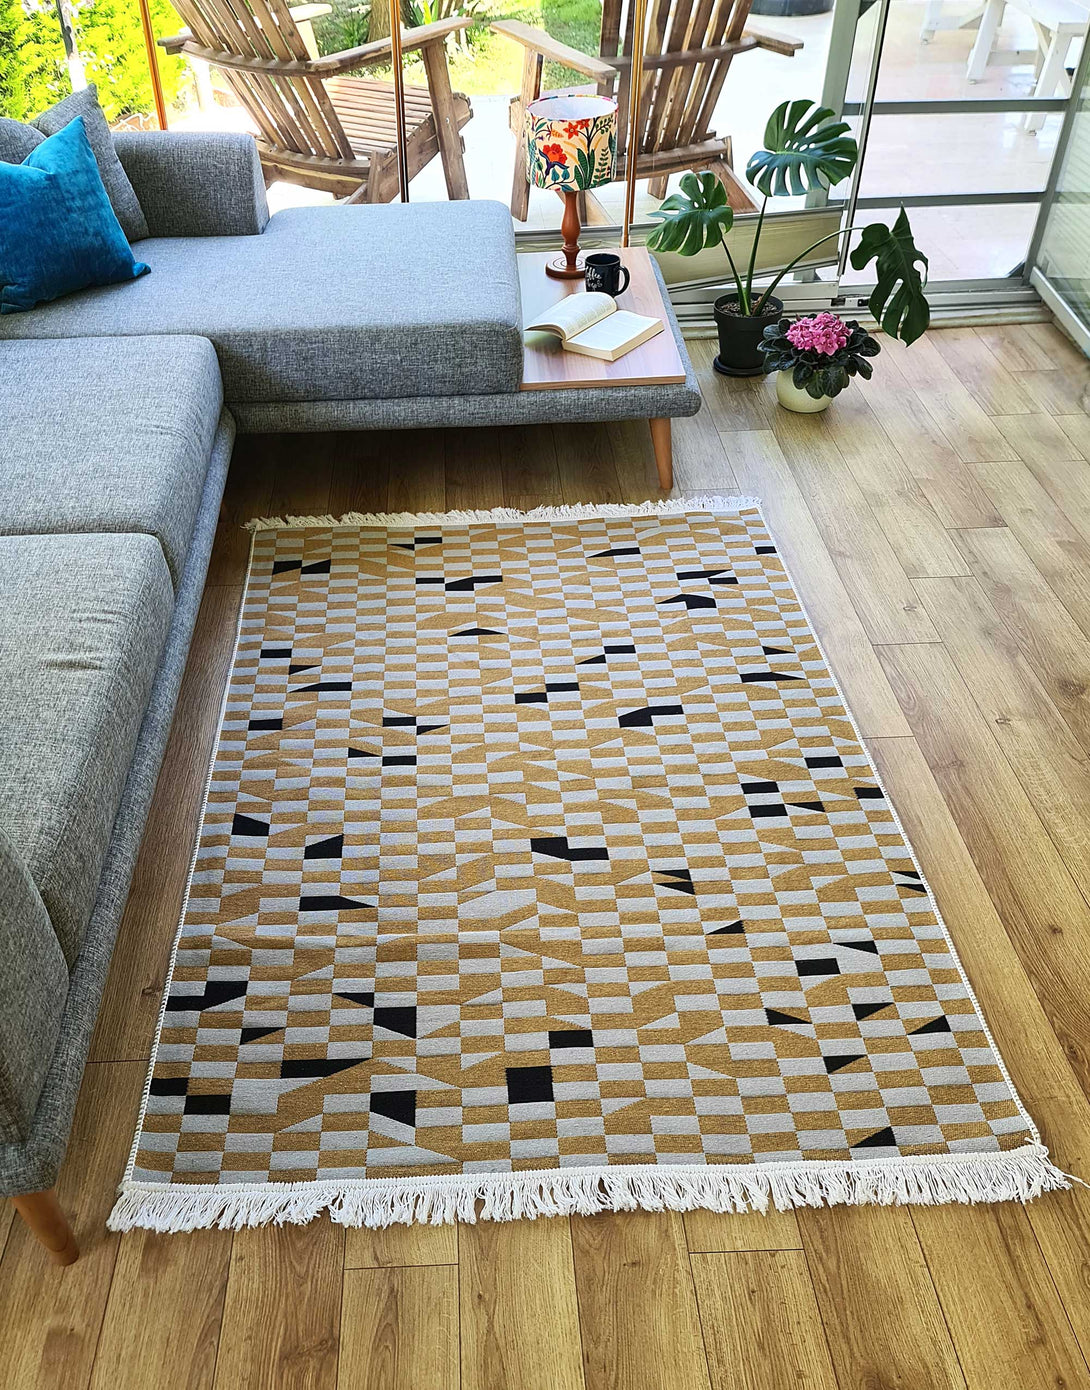 Tukish Carpets Organic Kilims 90% Acrylic cotton mis runner rugs Outdoor living room large area rugs Persian carpets